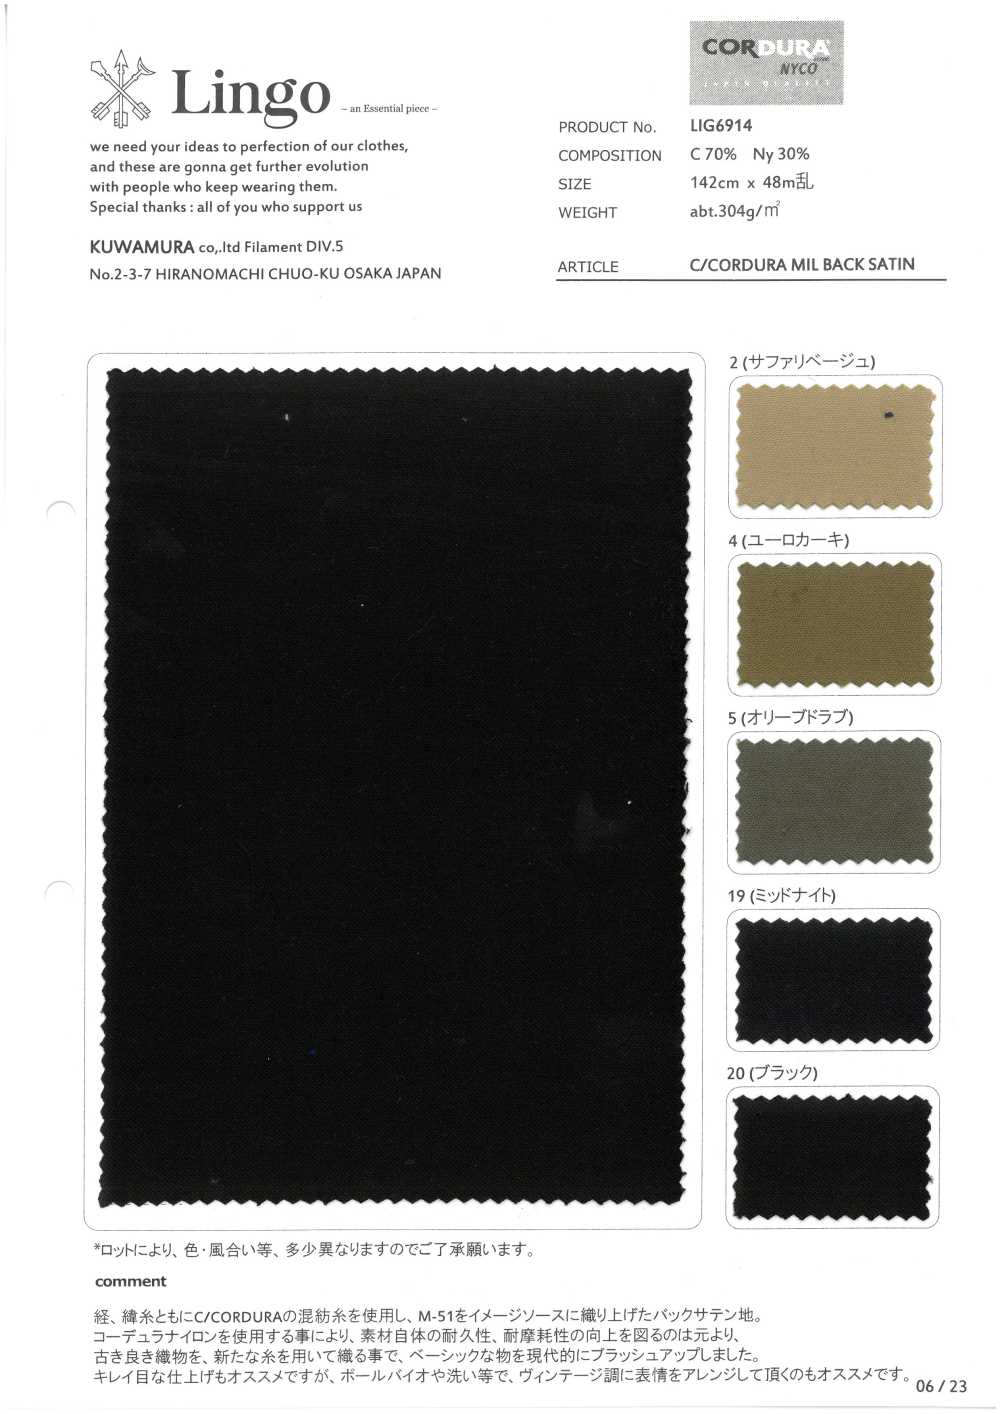 LIG6914 C/CORDURA MIL ESPALDA SATINADA[Fabrica Textil] Lingo (Textil Kuwamura)